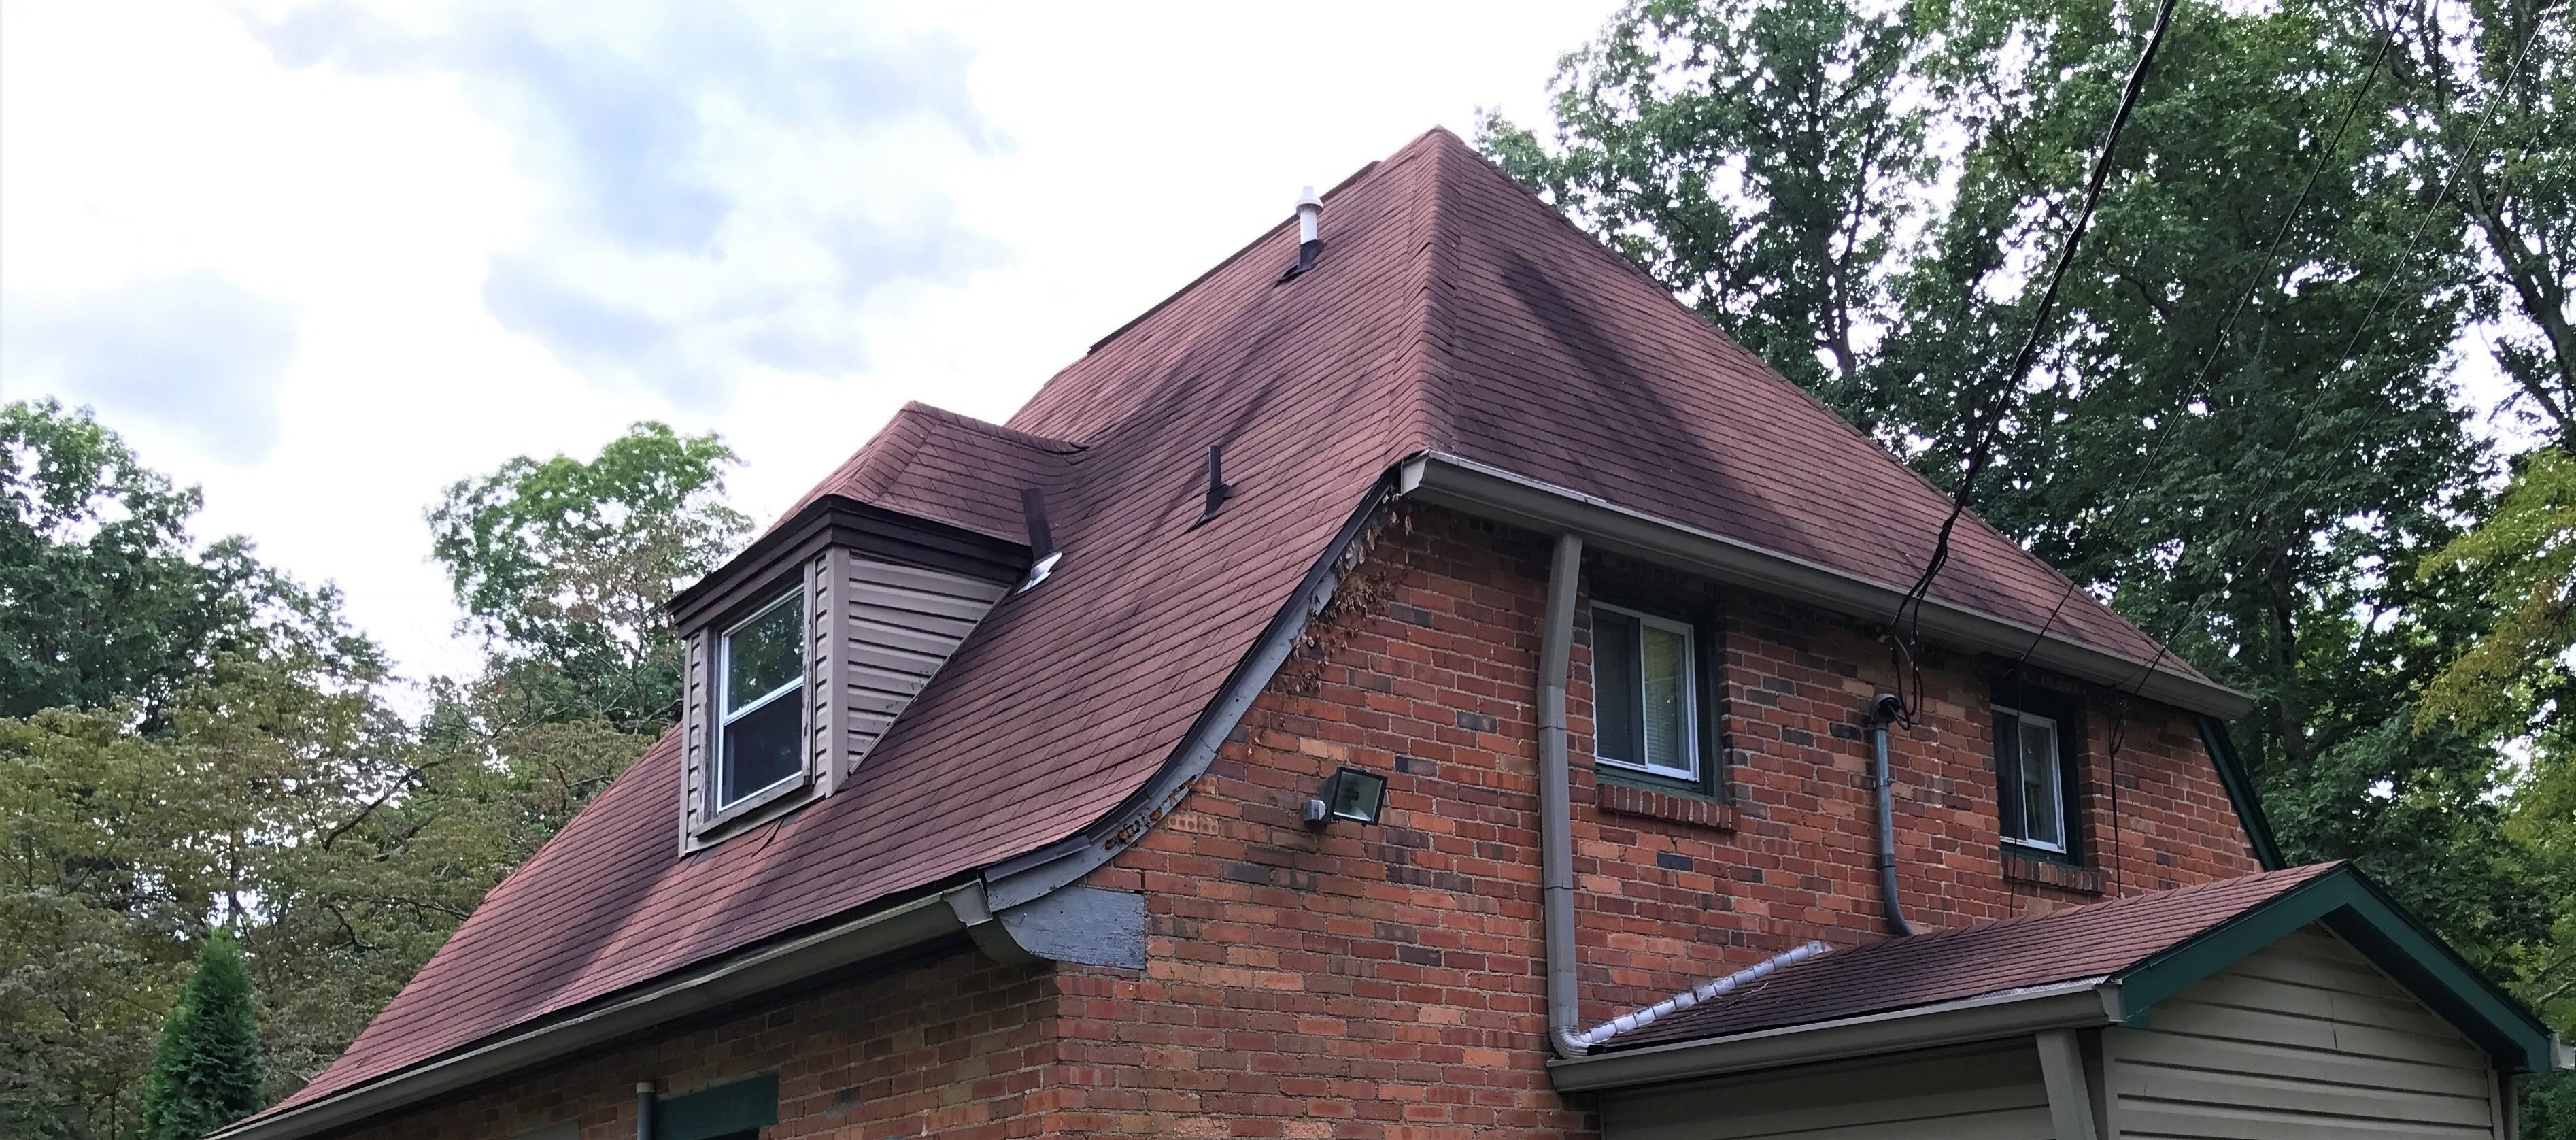 Shingle Roof Repair Dimensional Shingles v2-Clifty-749095-edited-864236-edited